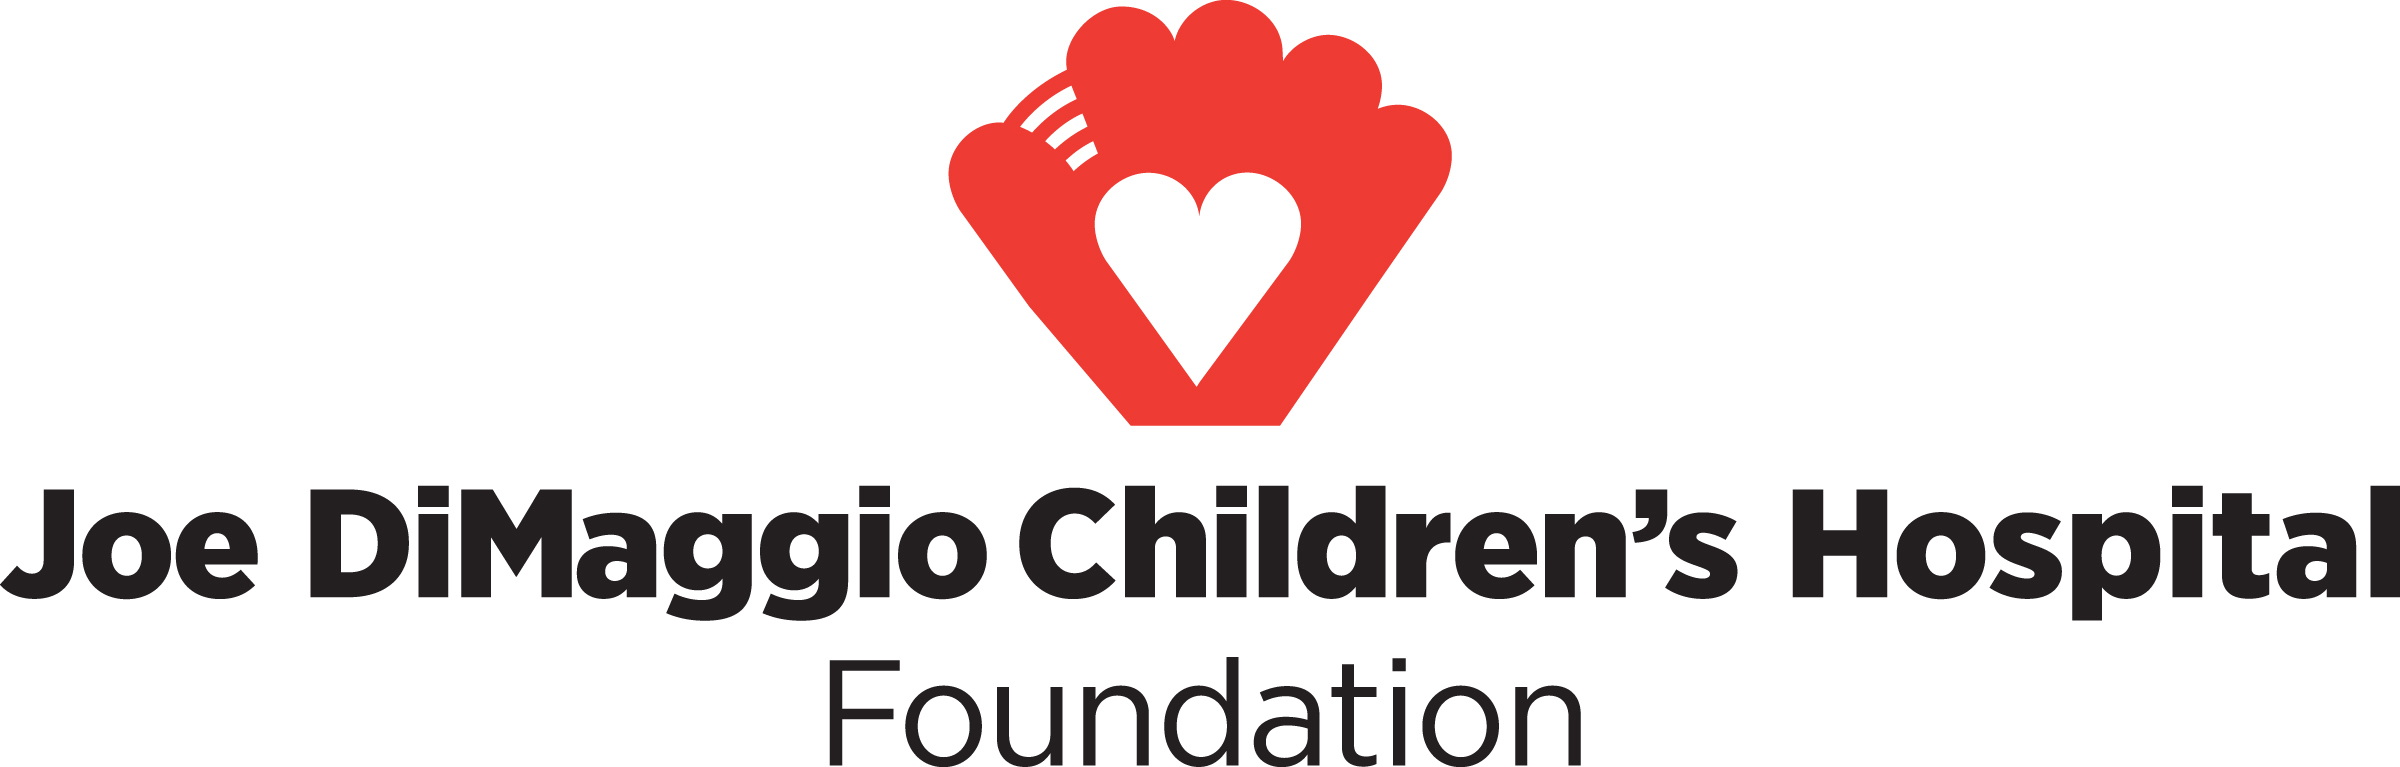 Jeff Conine's All-Star Golf Classic Raises $350,000 to Aid Families at Joe  DiMaggio Children's Hospital